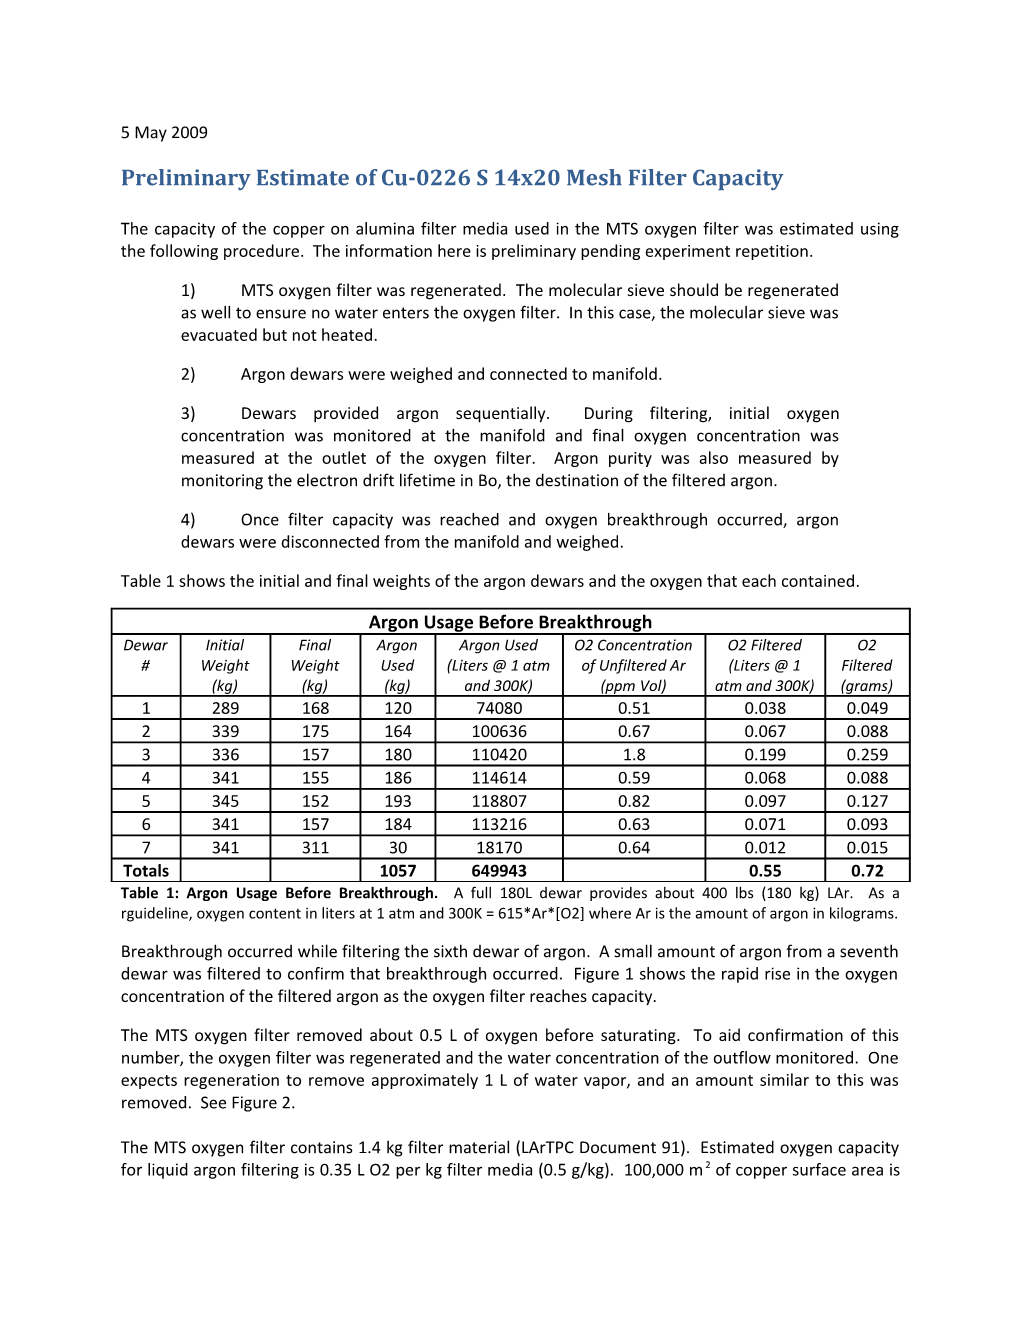 Preliminary Estimate of Cu-0226 S 14X20 Mesh Filter Capacity